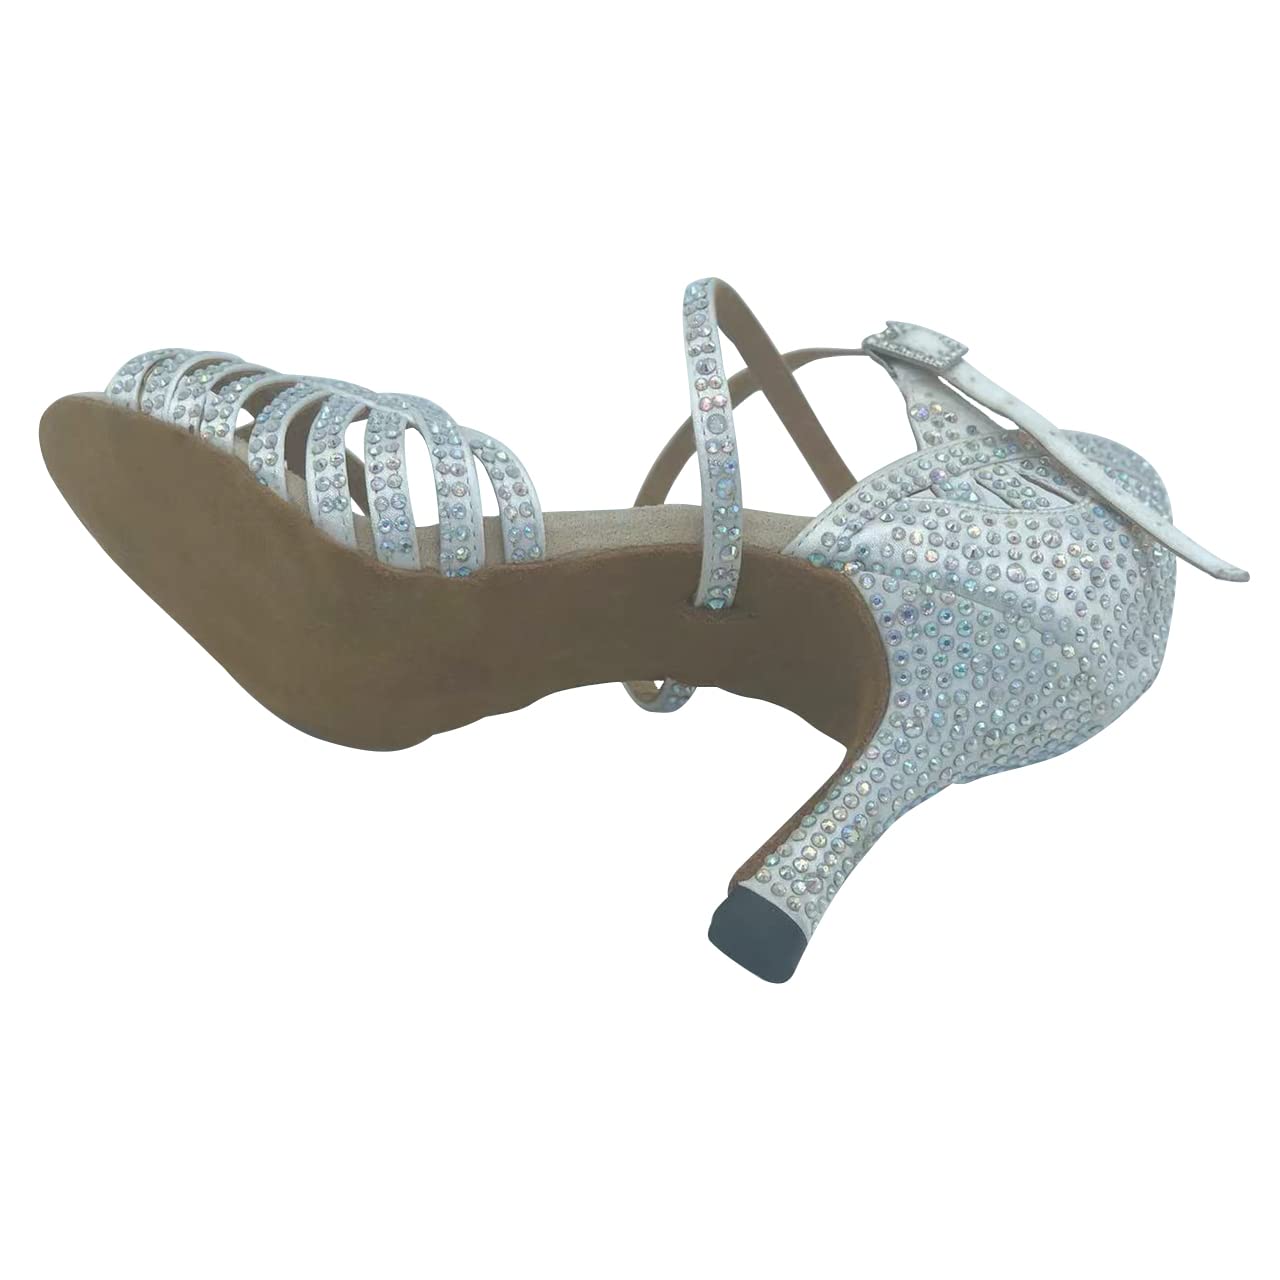 Pierides Women's Rhinestone Ballroom Dance Shoes Performance Wedding Dance Shoes for 1920s,2.75" Heel,8 US